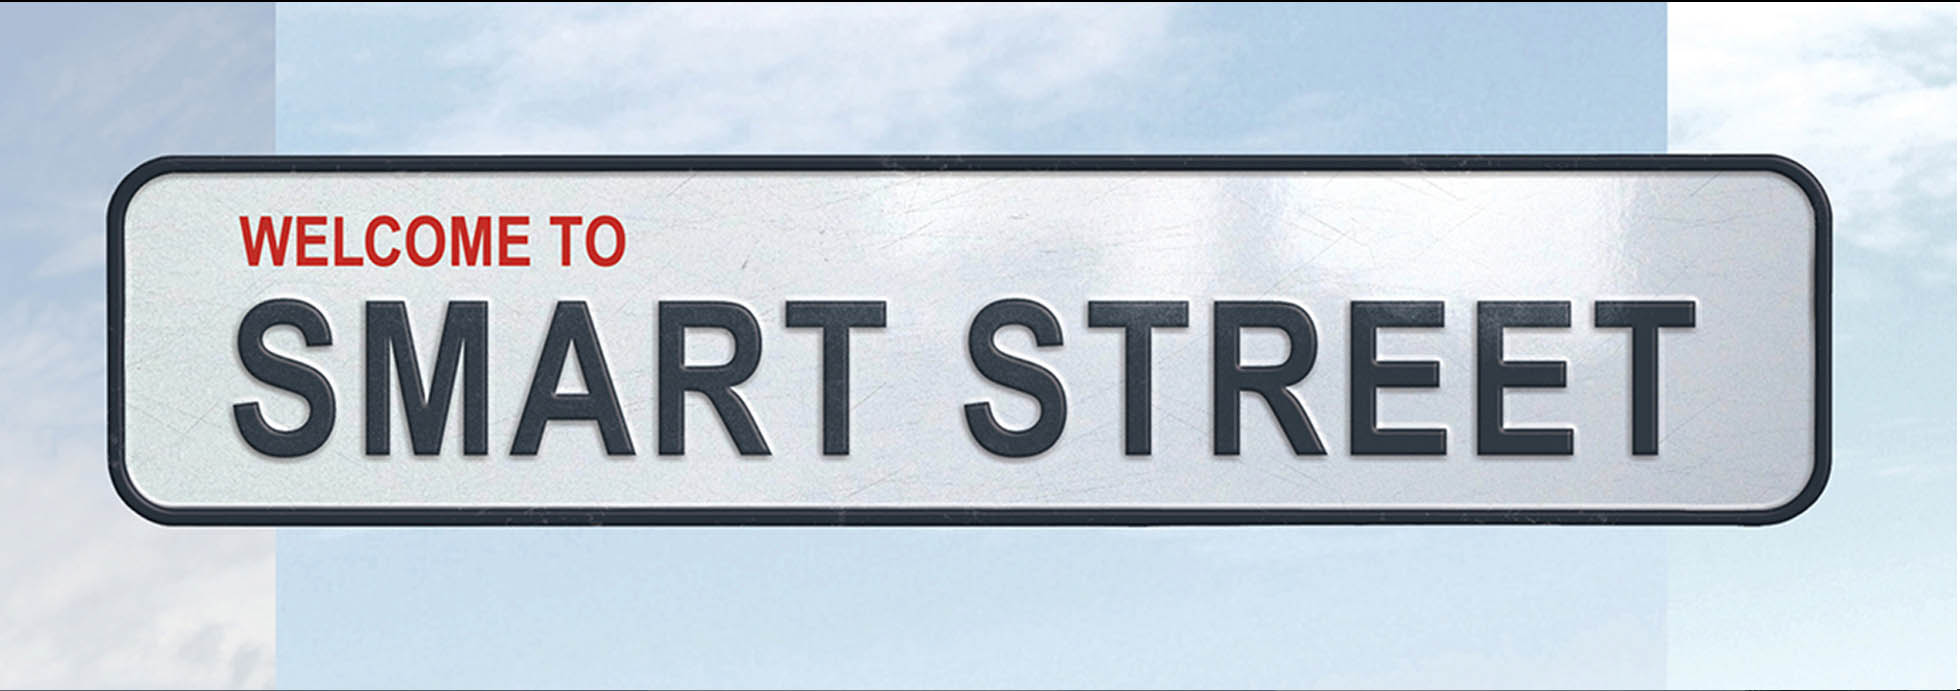 smart street banner